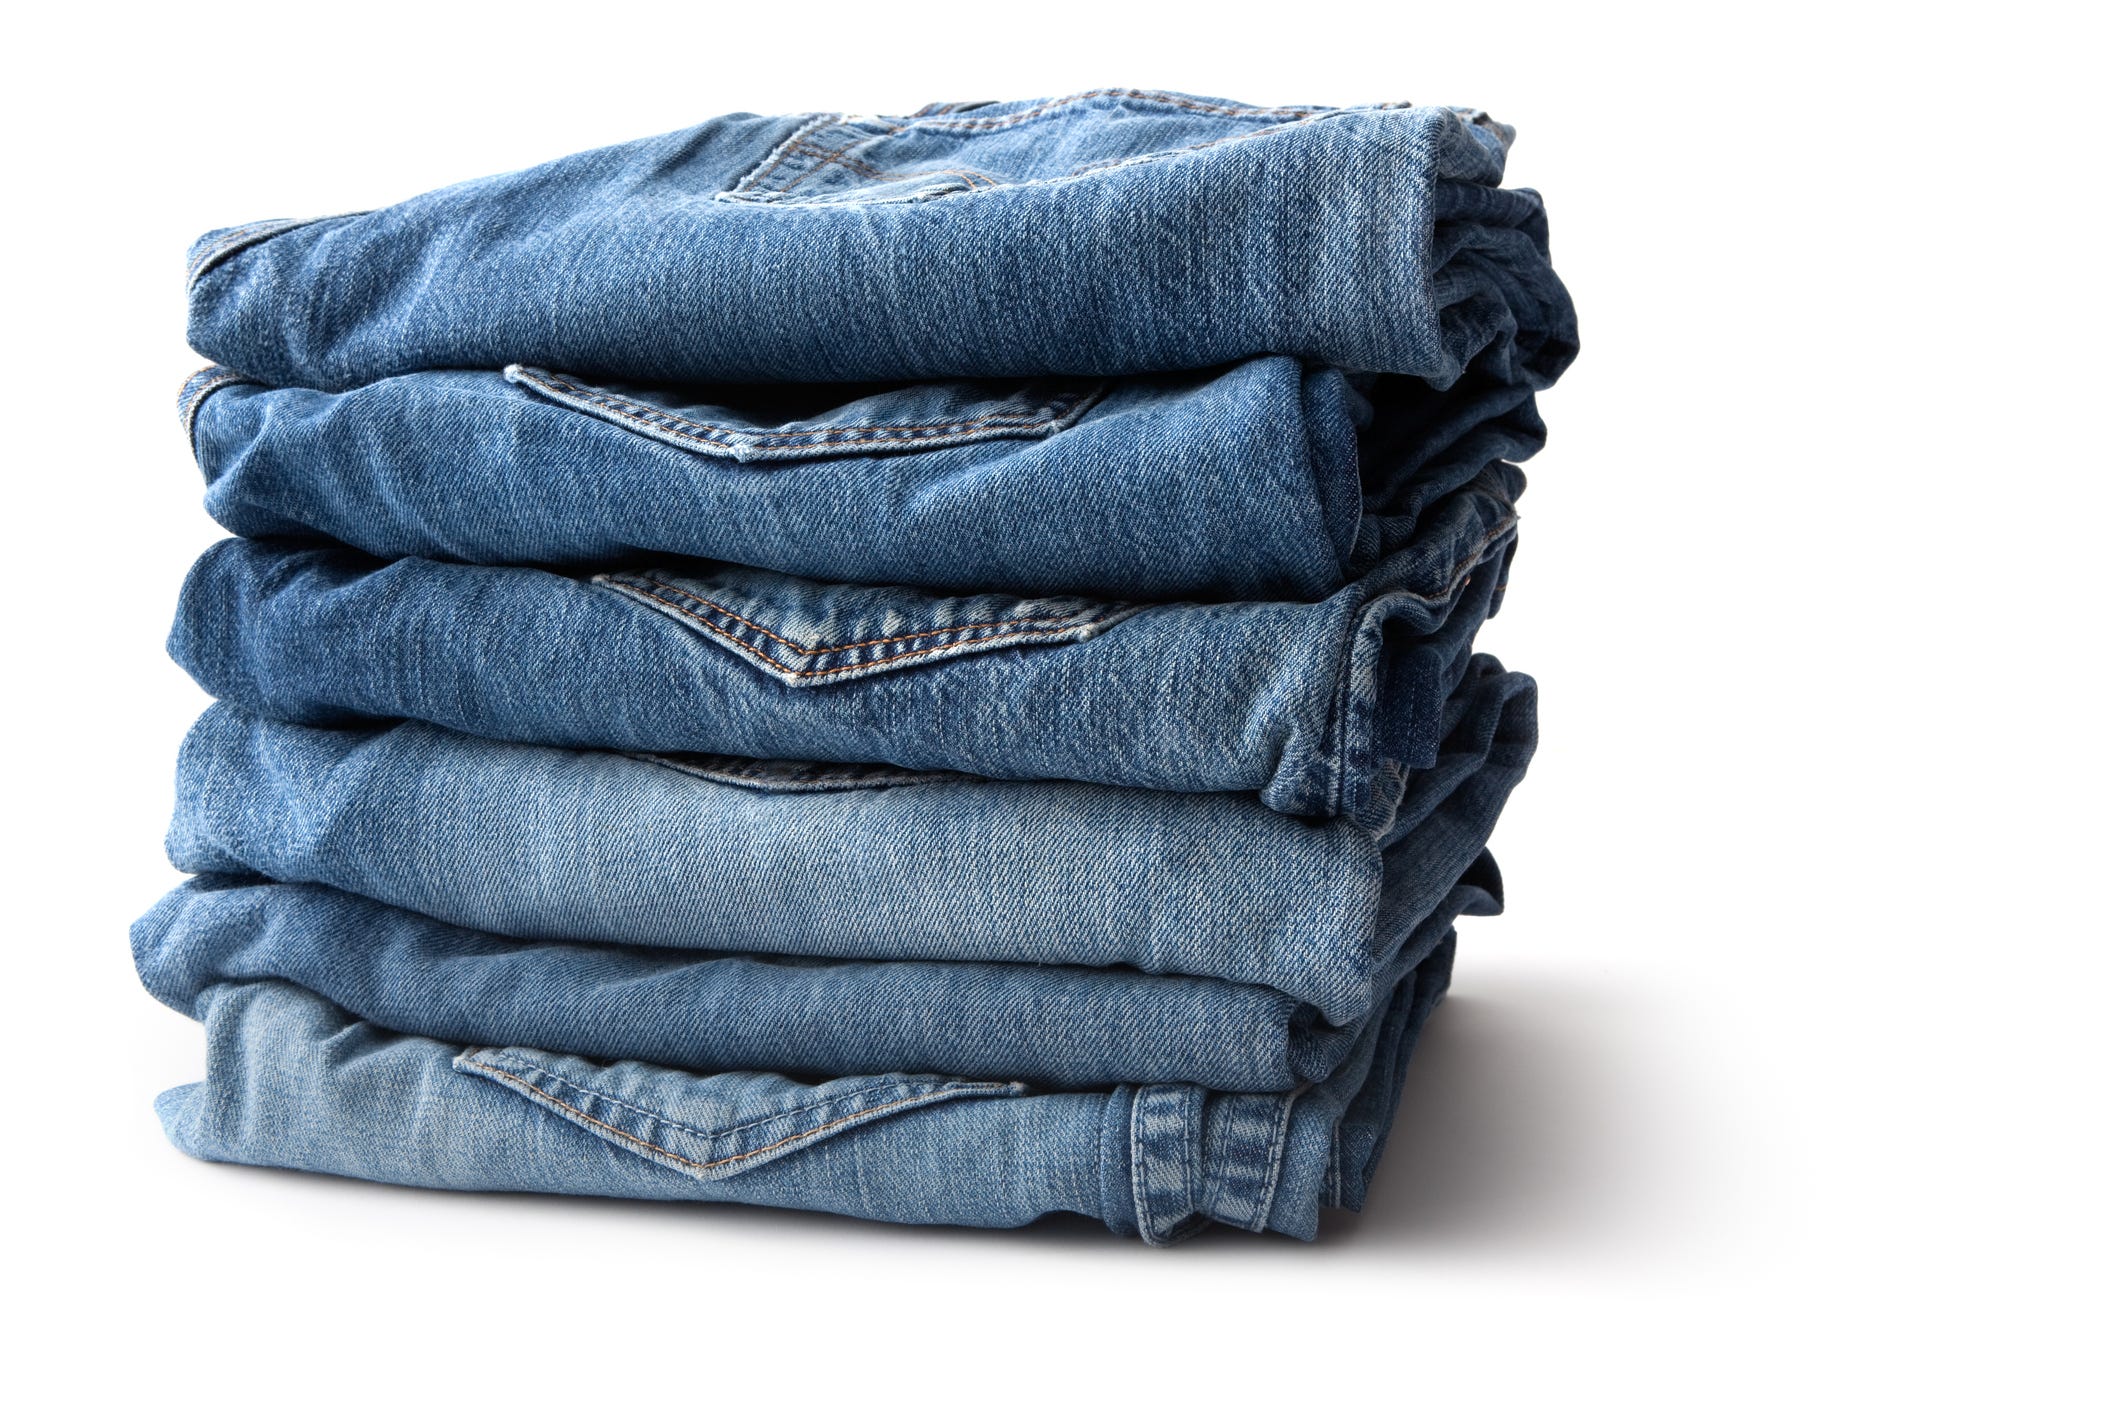 wrangler jeans parent company